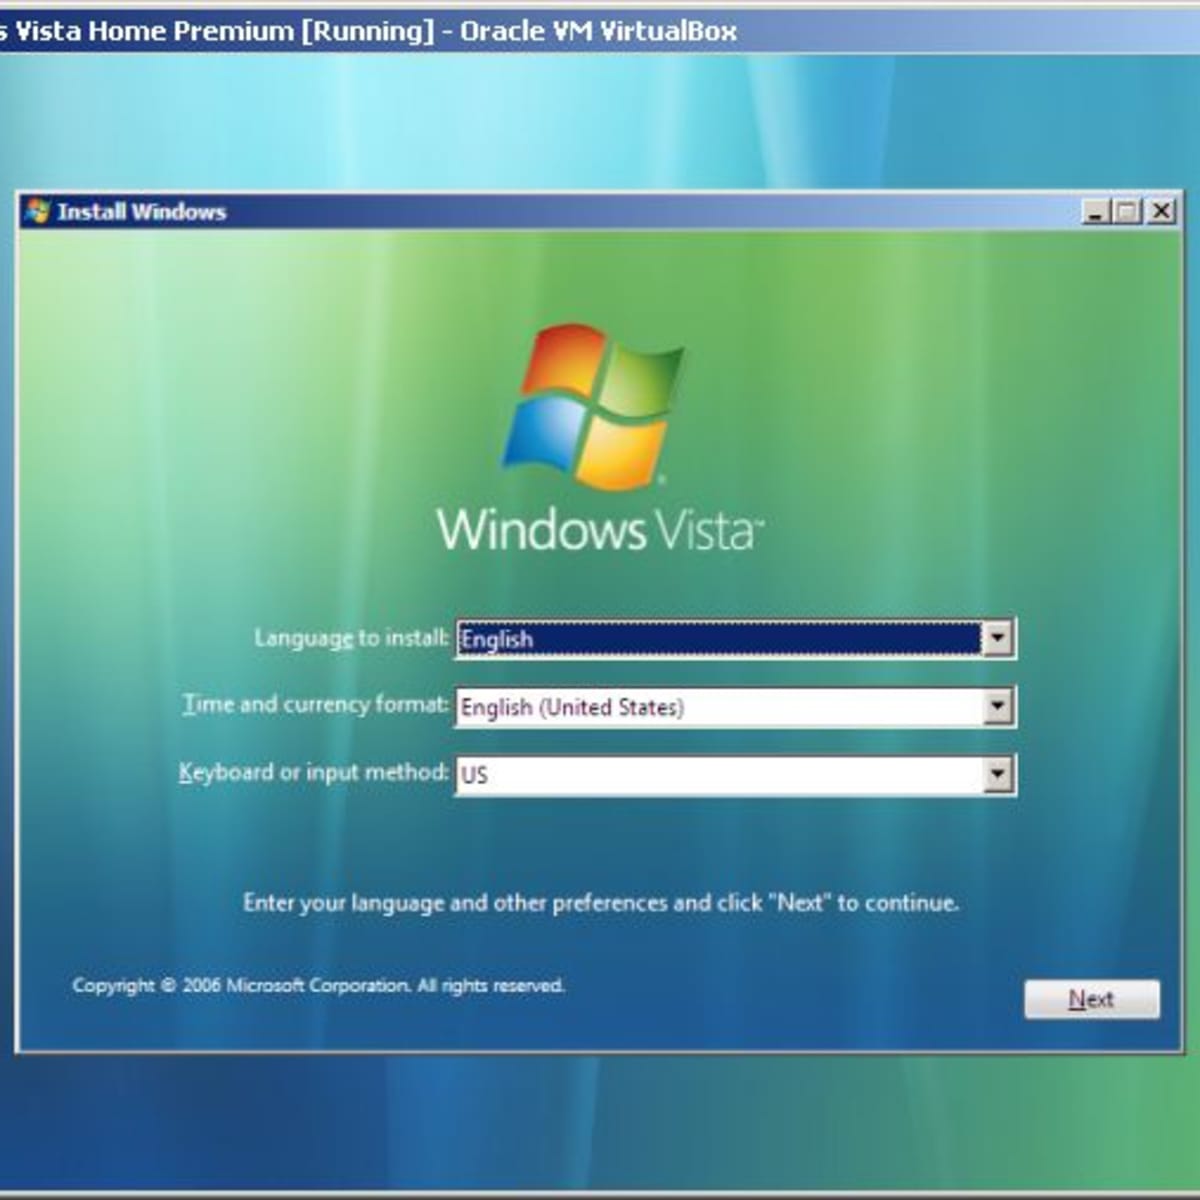 install windows 11 on virtualbox